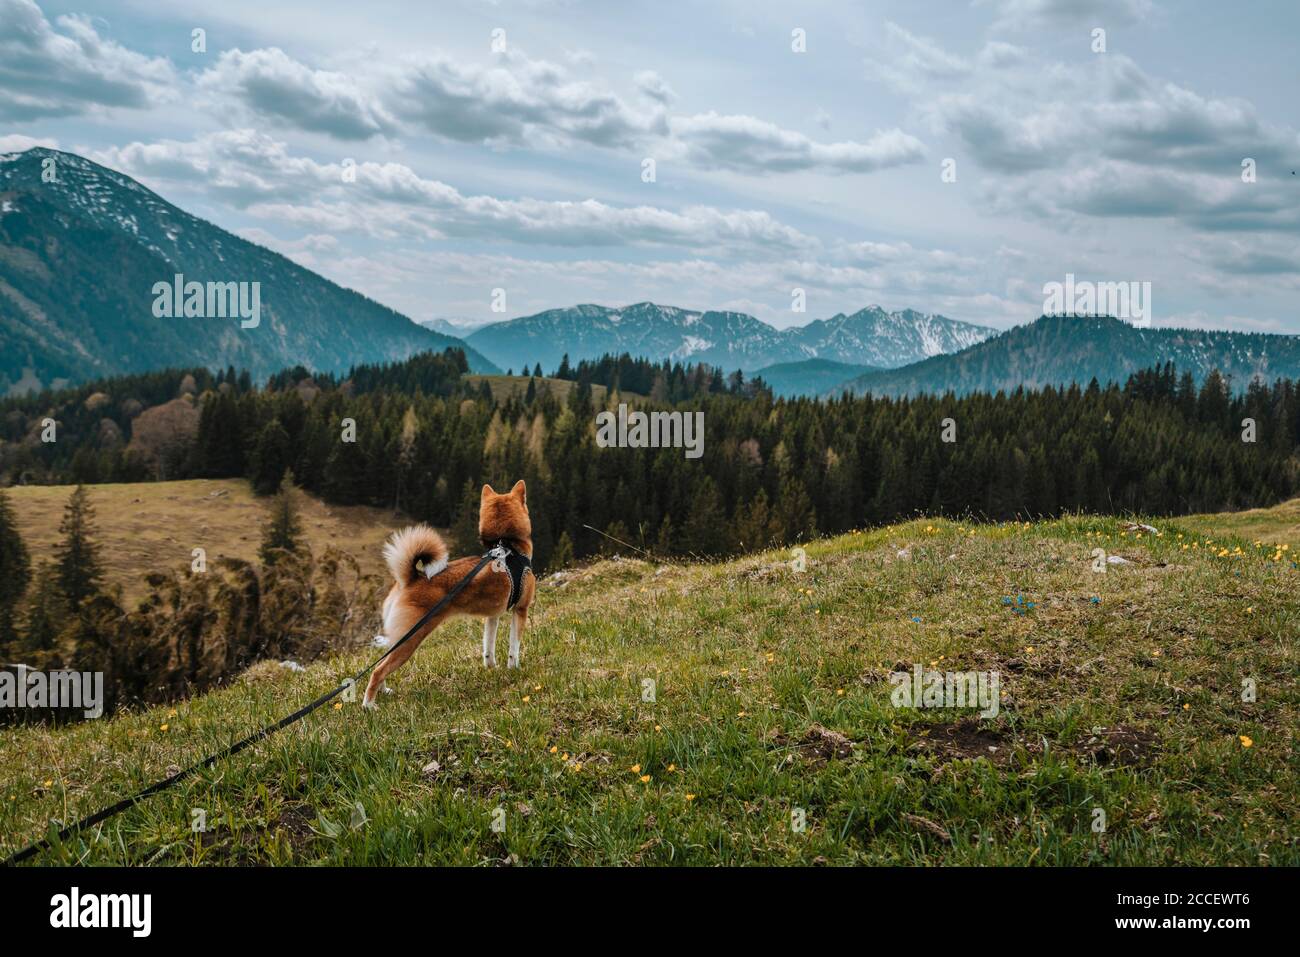 Europe, Germany, Bavaria, Bavarian Alps, Sudelfeld, Tatzelwurm, Brannenburg, Bayrischzell, Dog on Leash, Stock Photo